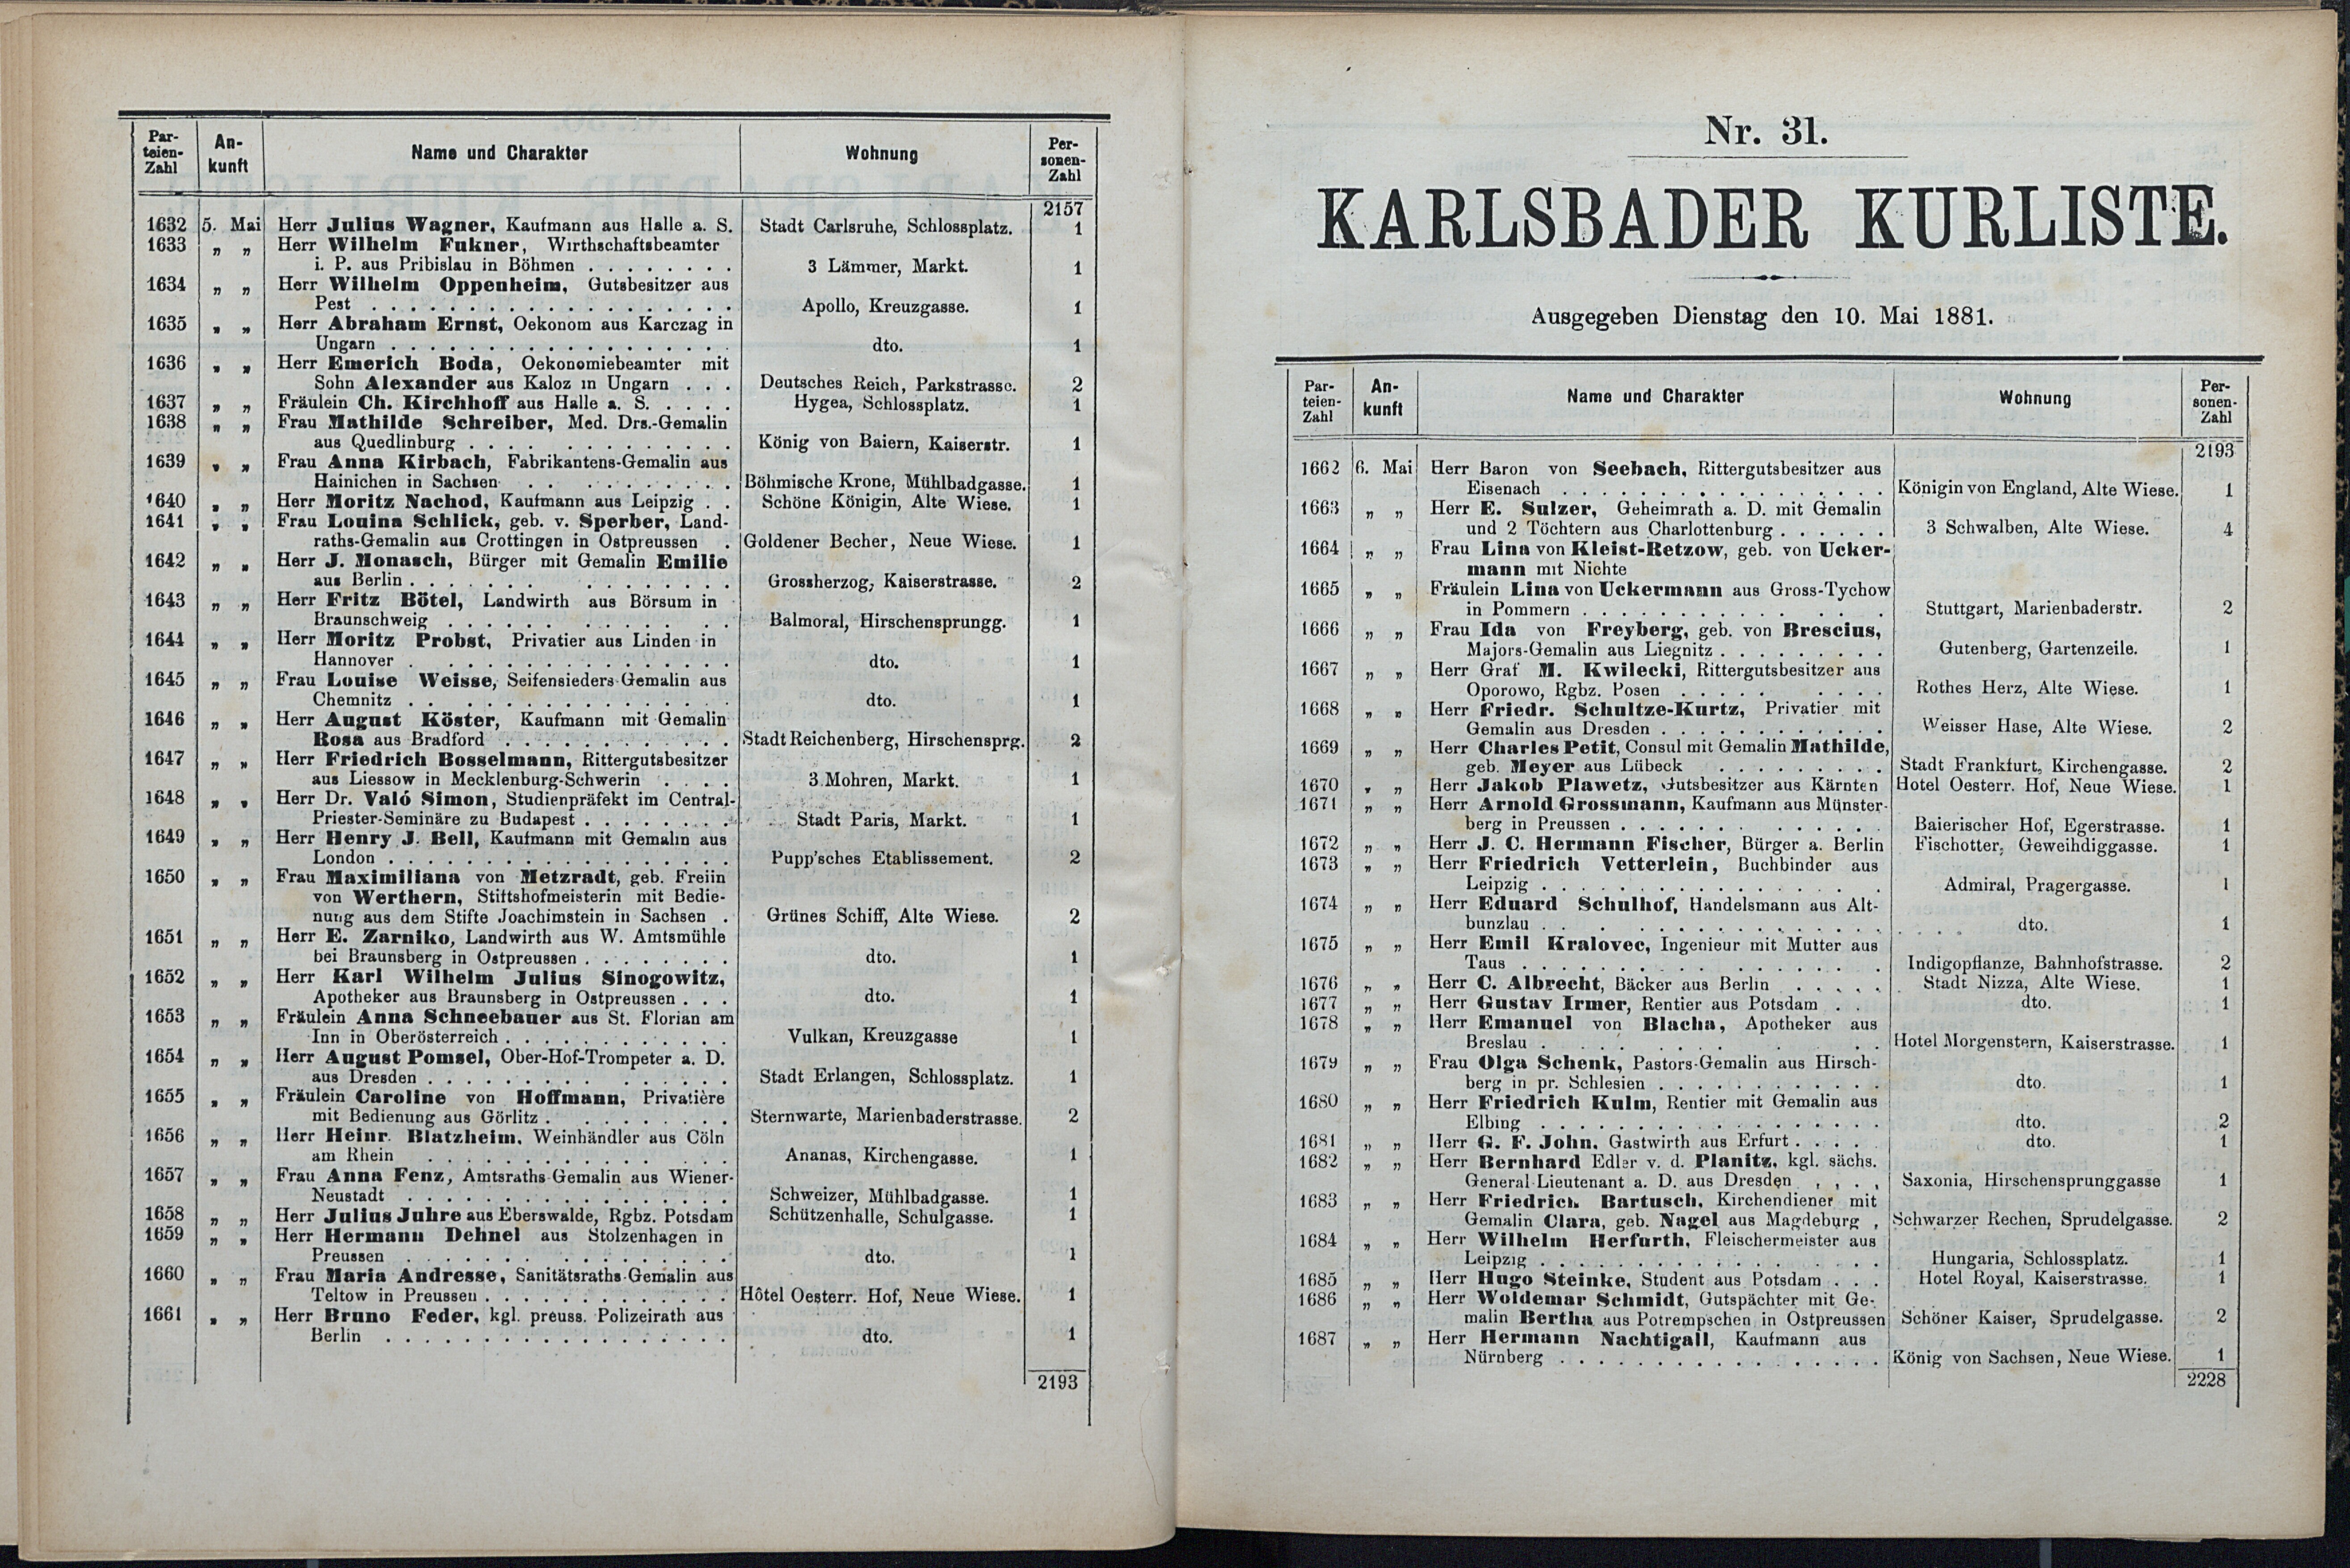 43. soap-kv_knihovna_karlsbader-kurliste-1881_0440